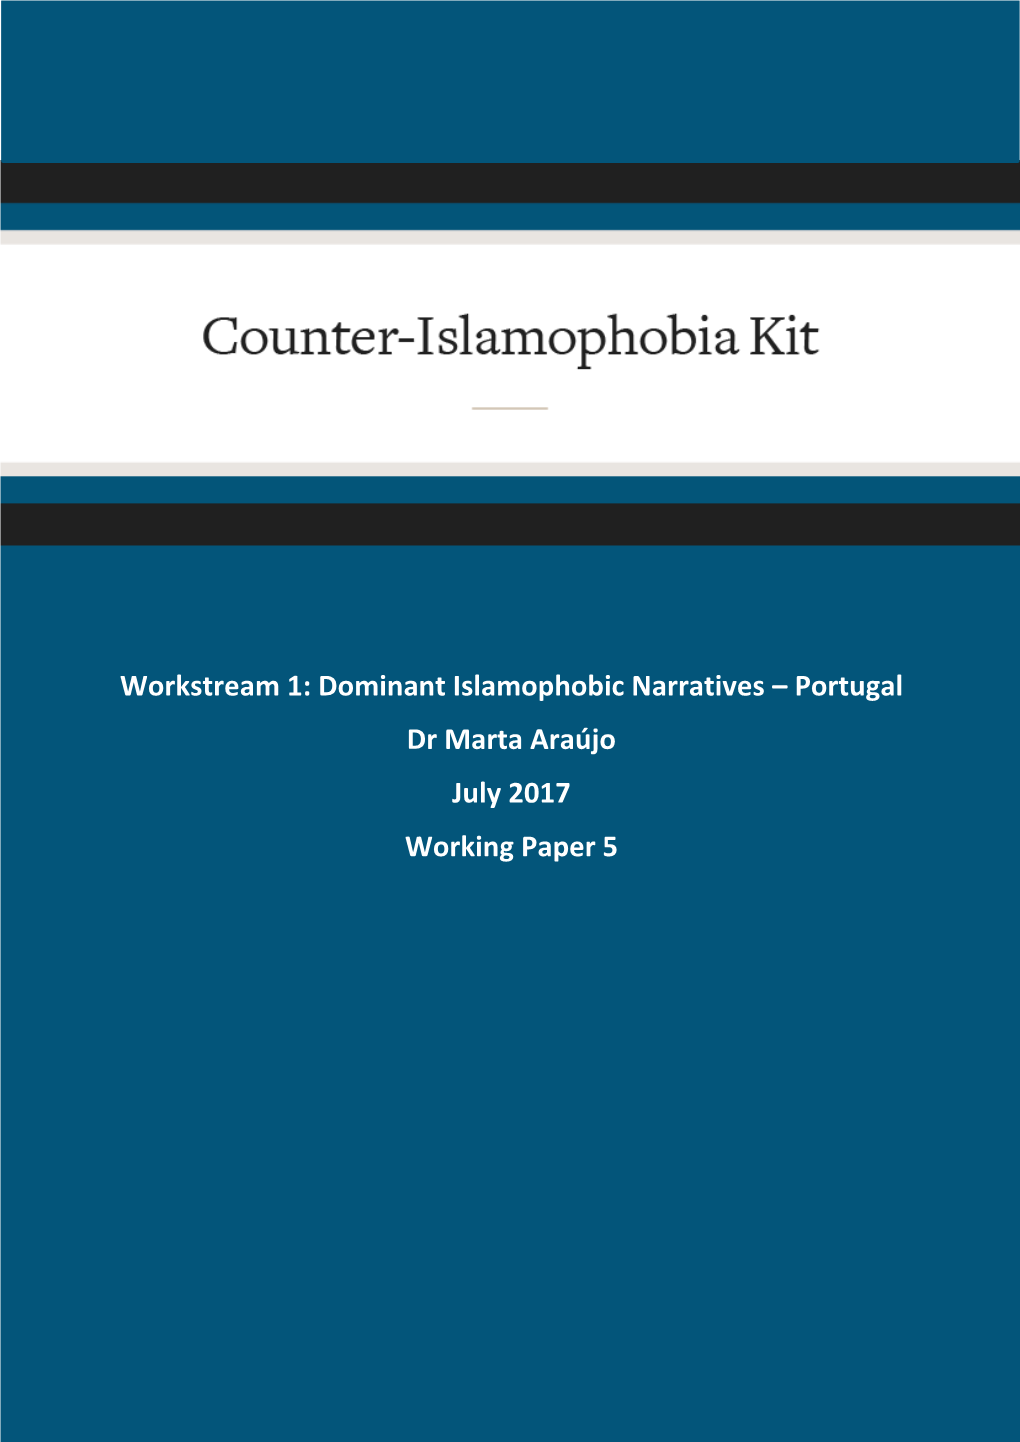 Workstream 1: Dominant Islamophobic Narratives – Portugal Dr Marta Araújo CIK: Working Paper 5